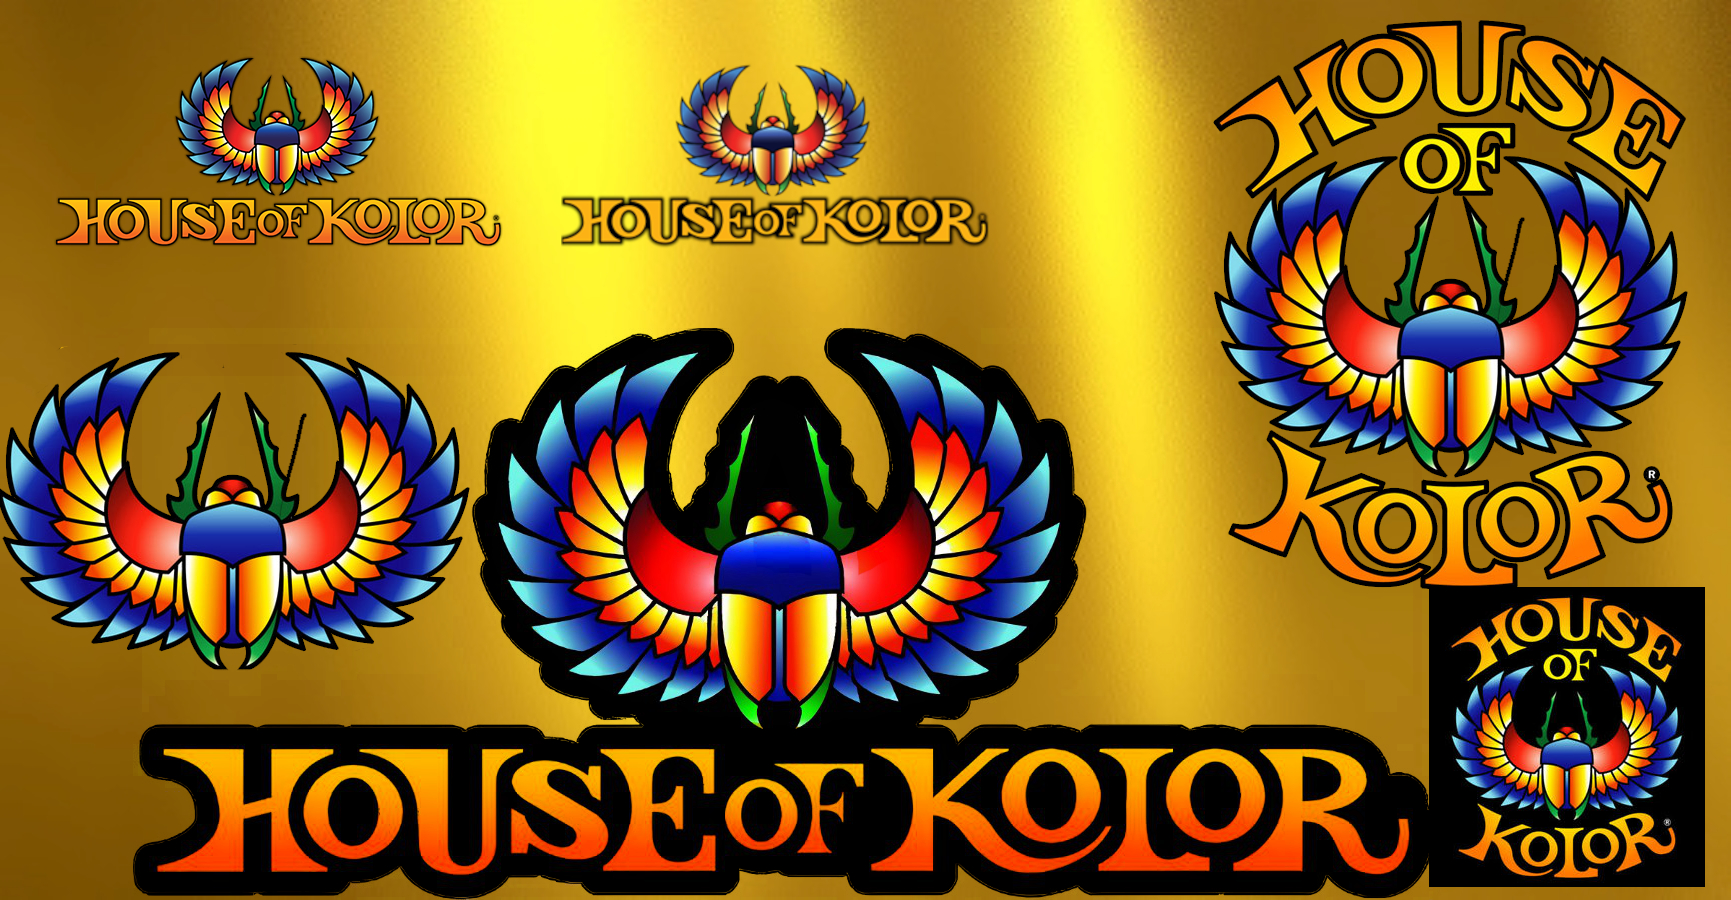 House of Kolor Logos.jpg